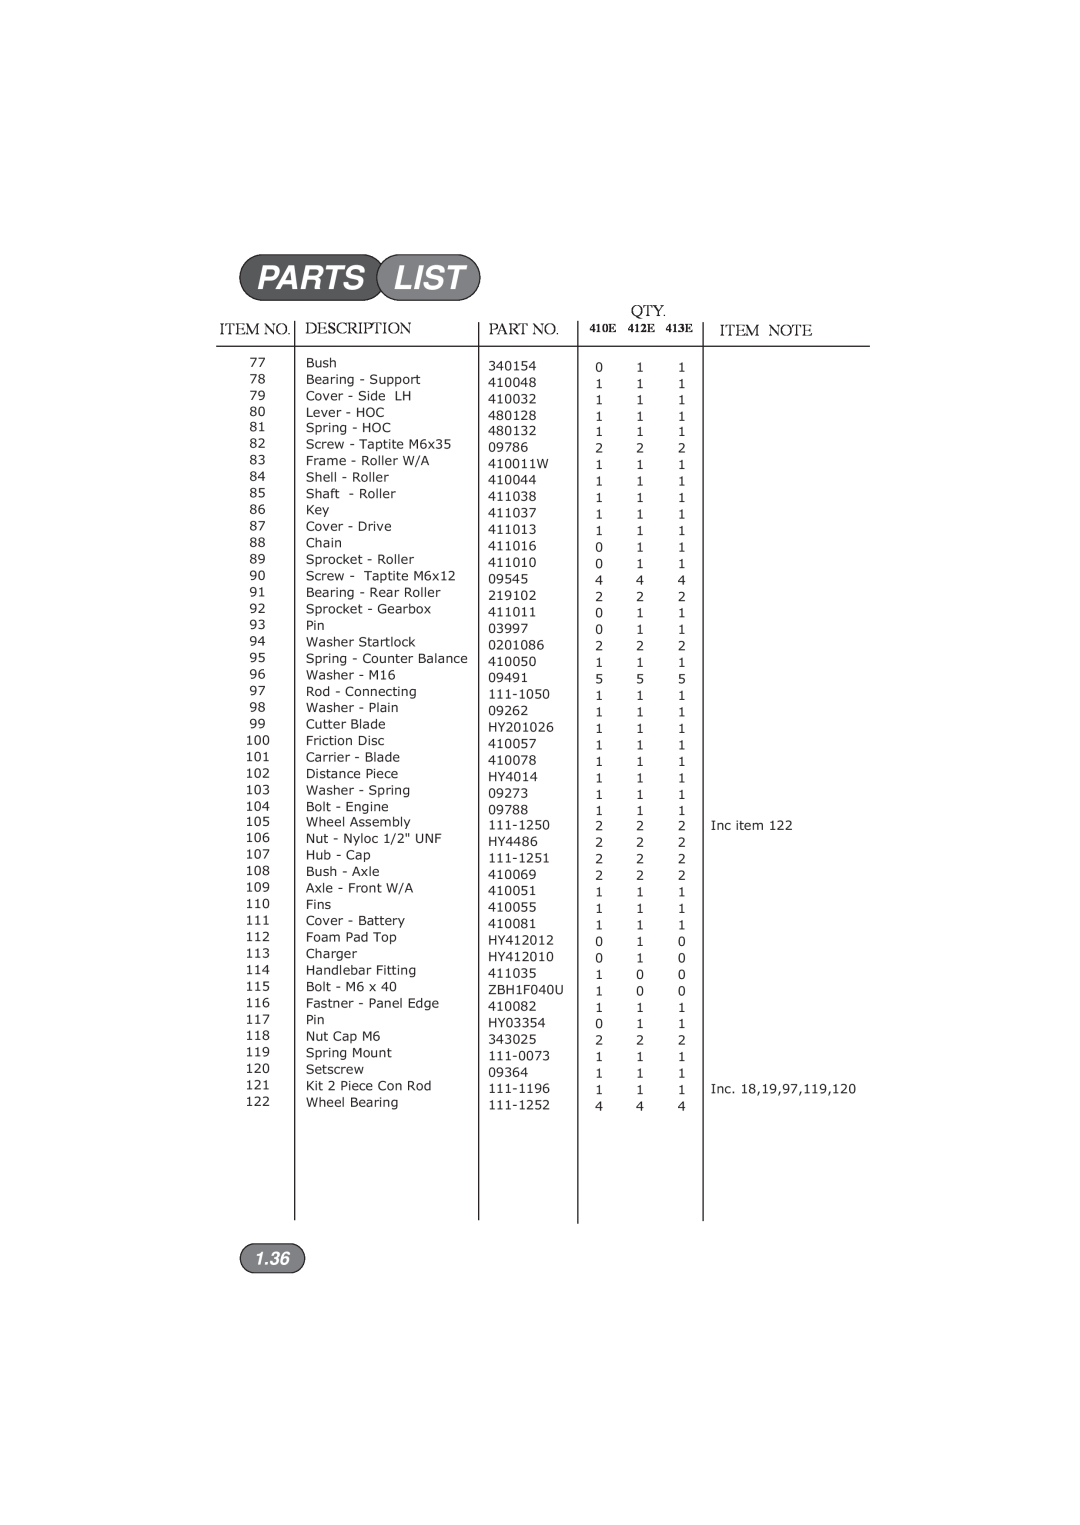 Hayter Mowers 412E manual 1.36, Parts, List, Description, Item Note, 410E, 413E 